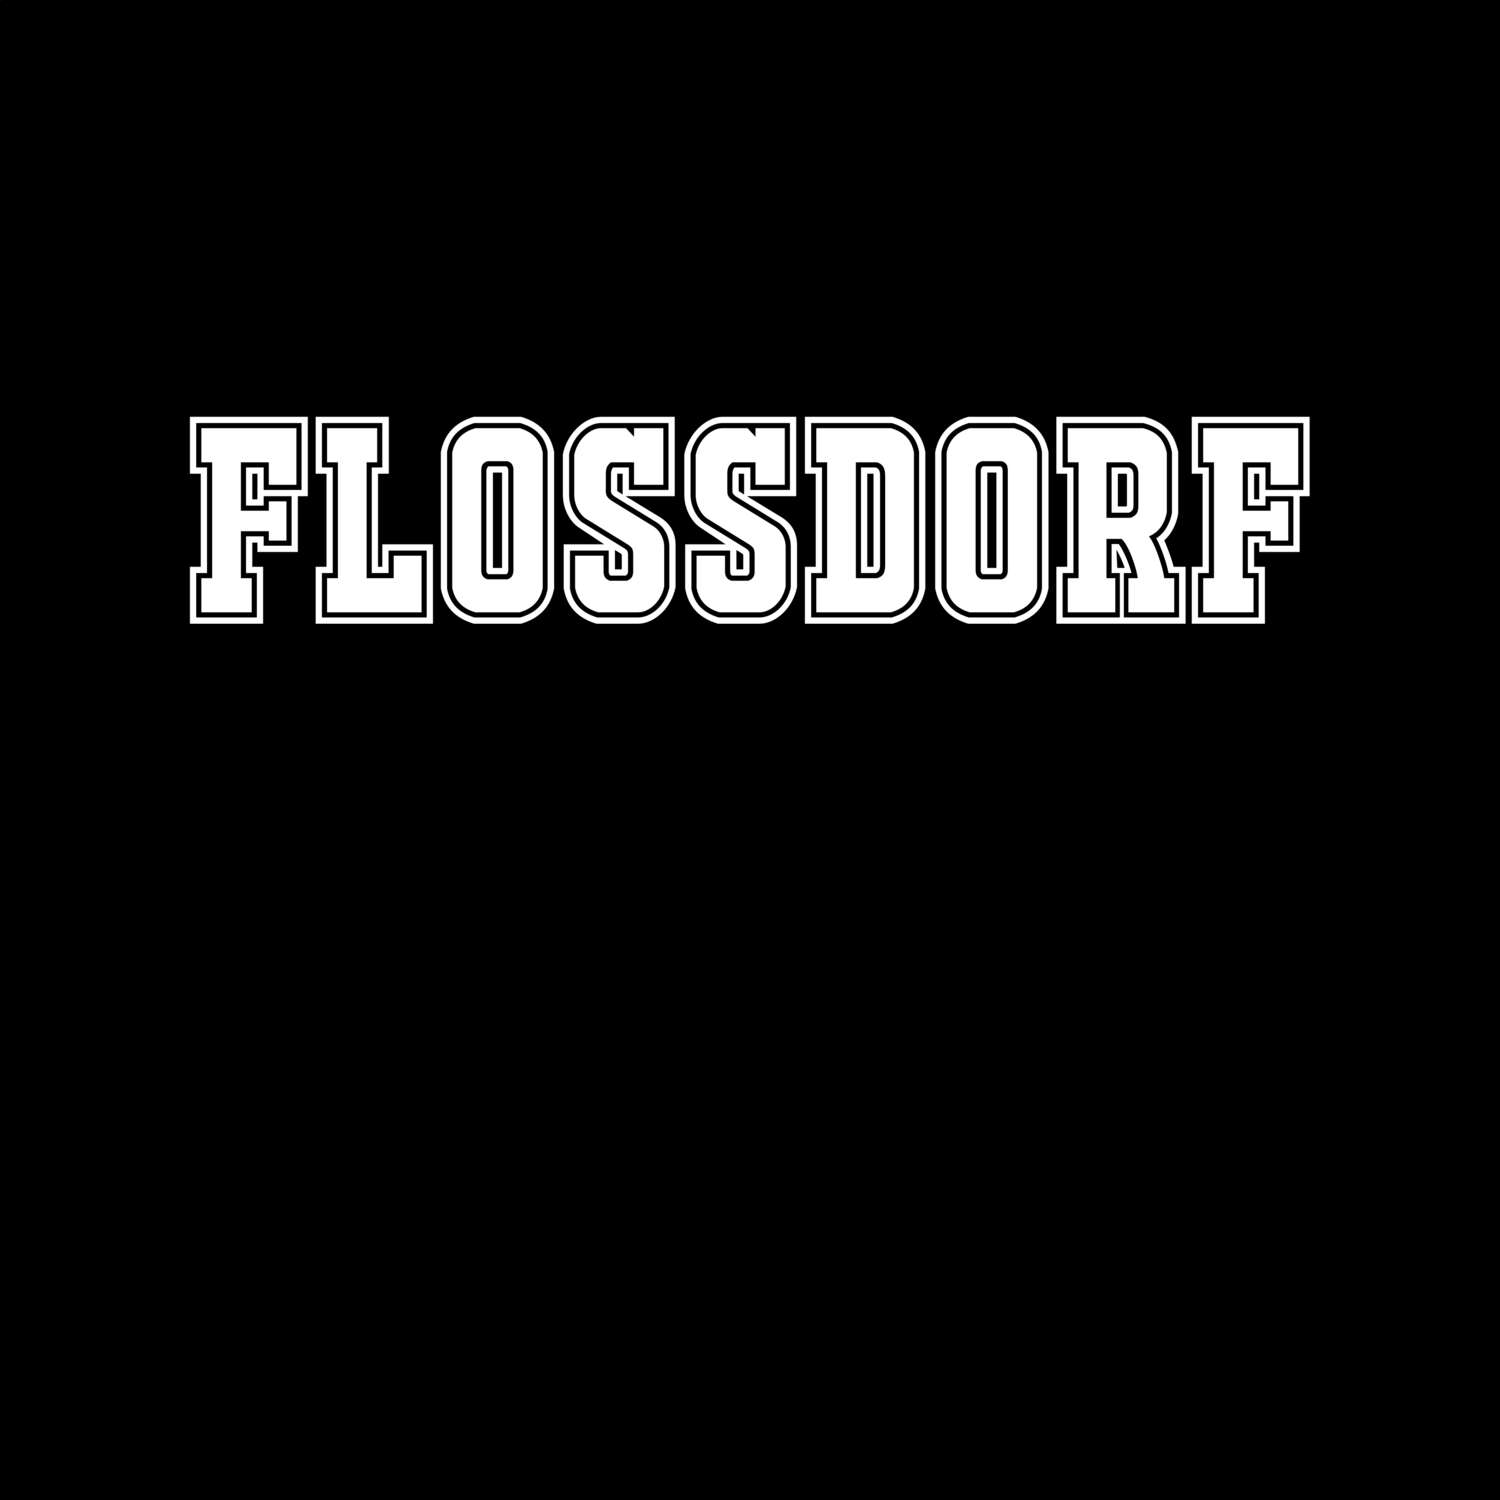 Floßdorf T-Shirt »Classic«